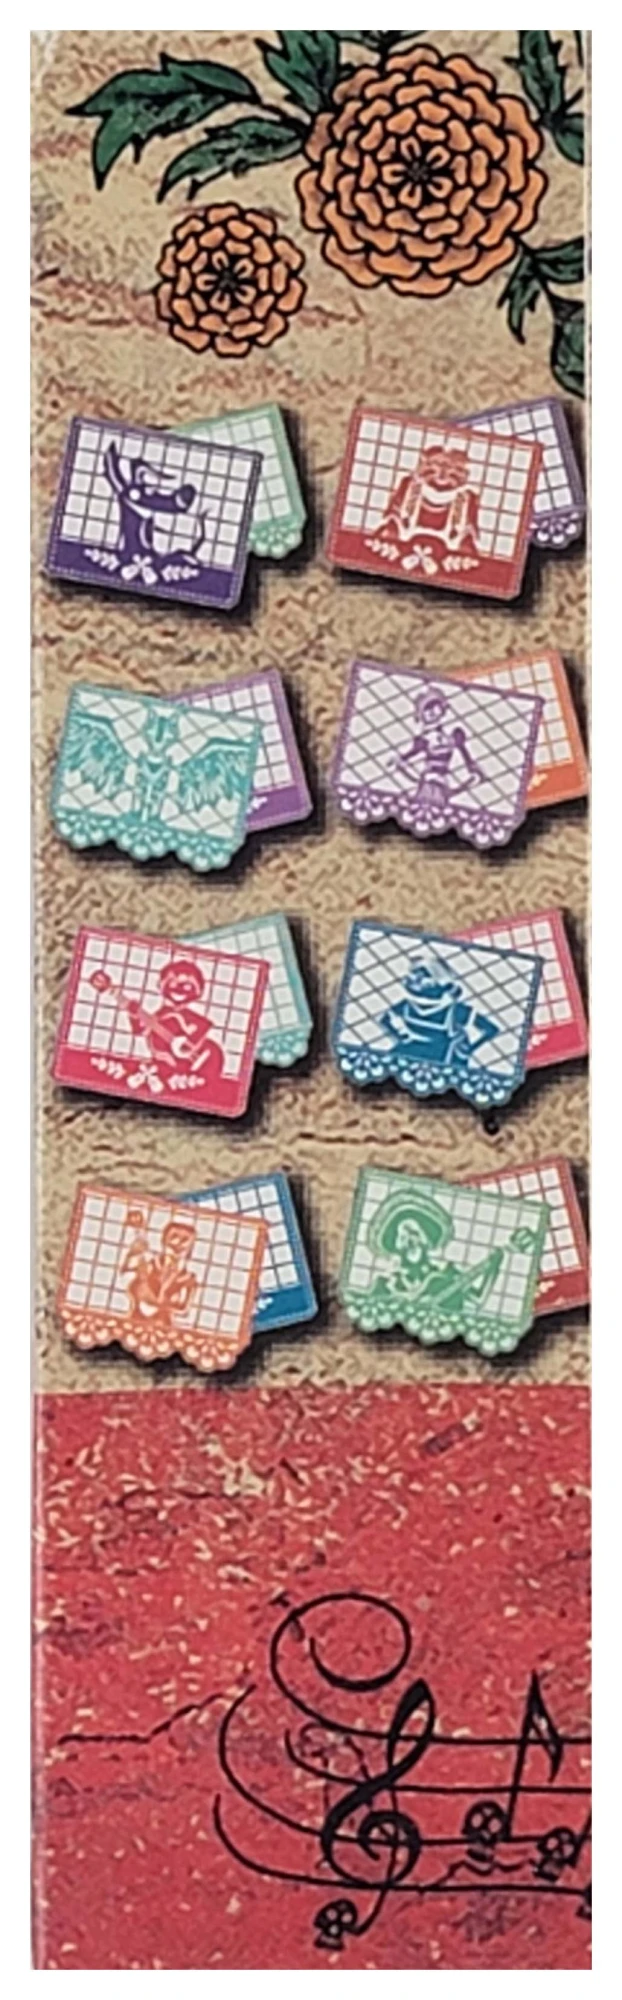 item Disney Pin - Coco Papel Picado Mystery Series - Unopened Box 150394 2